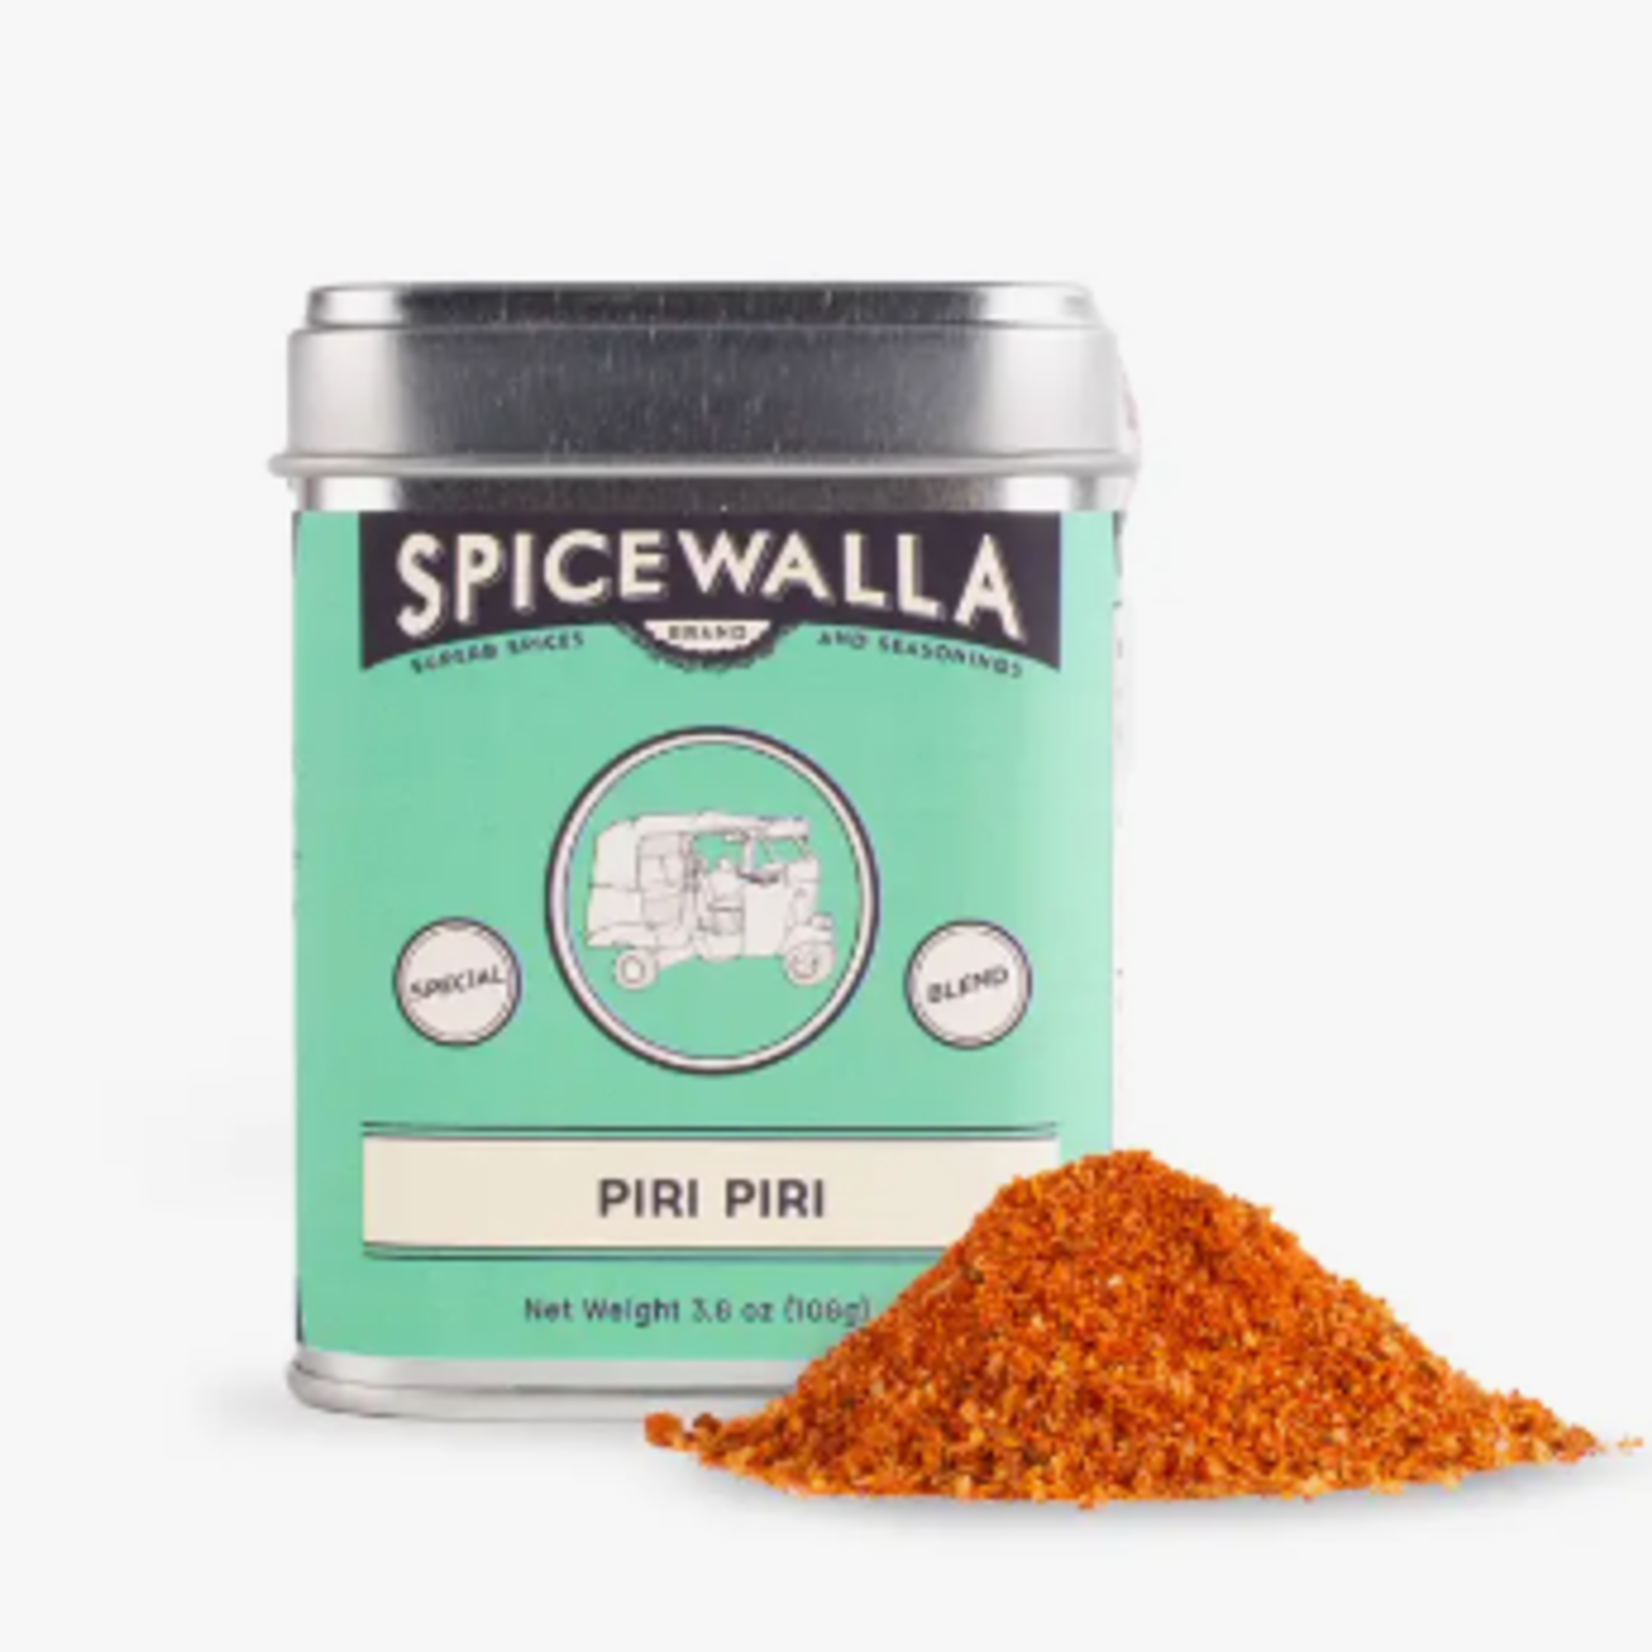 Spicewalla Spicewalla Piri Piri Spice Blend